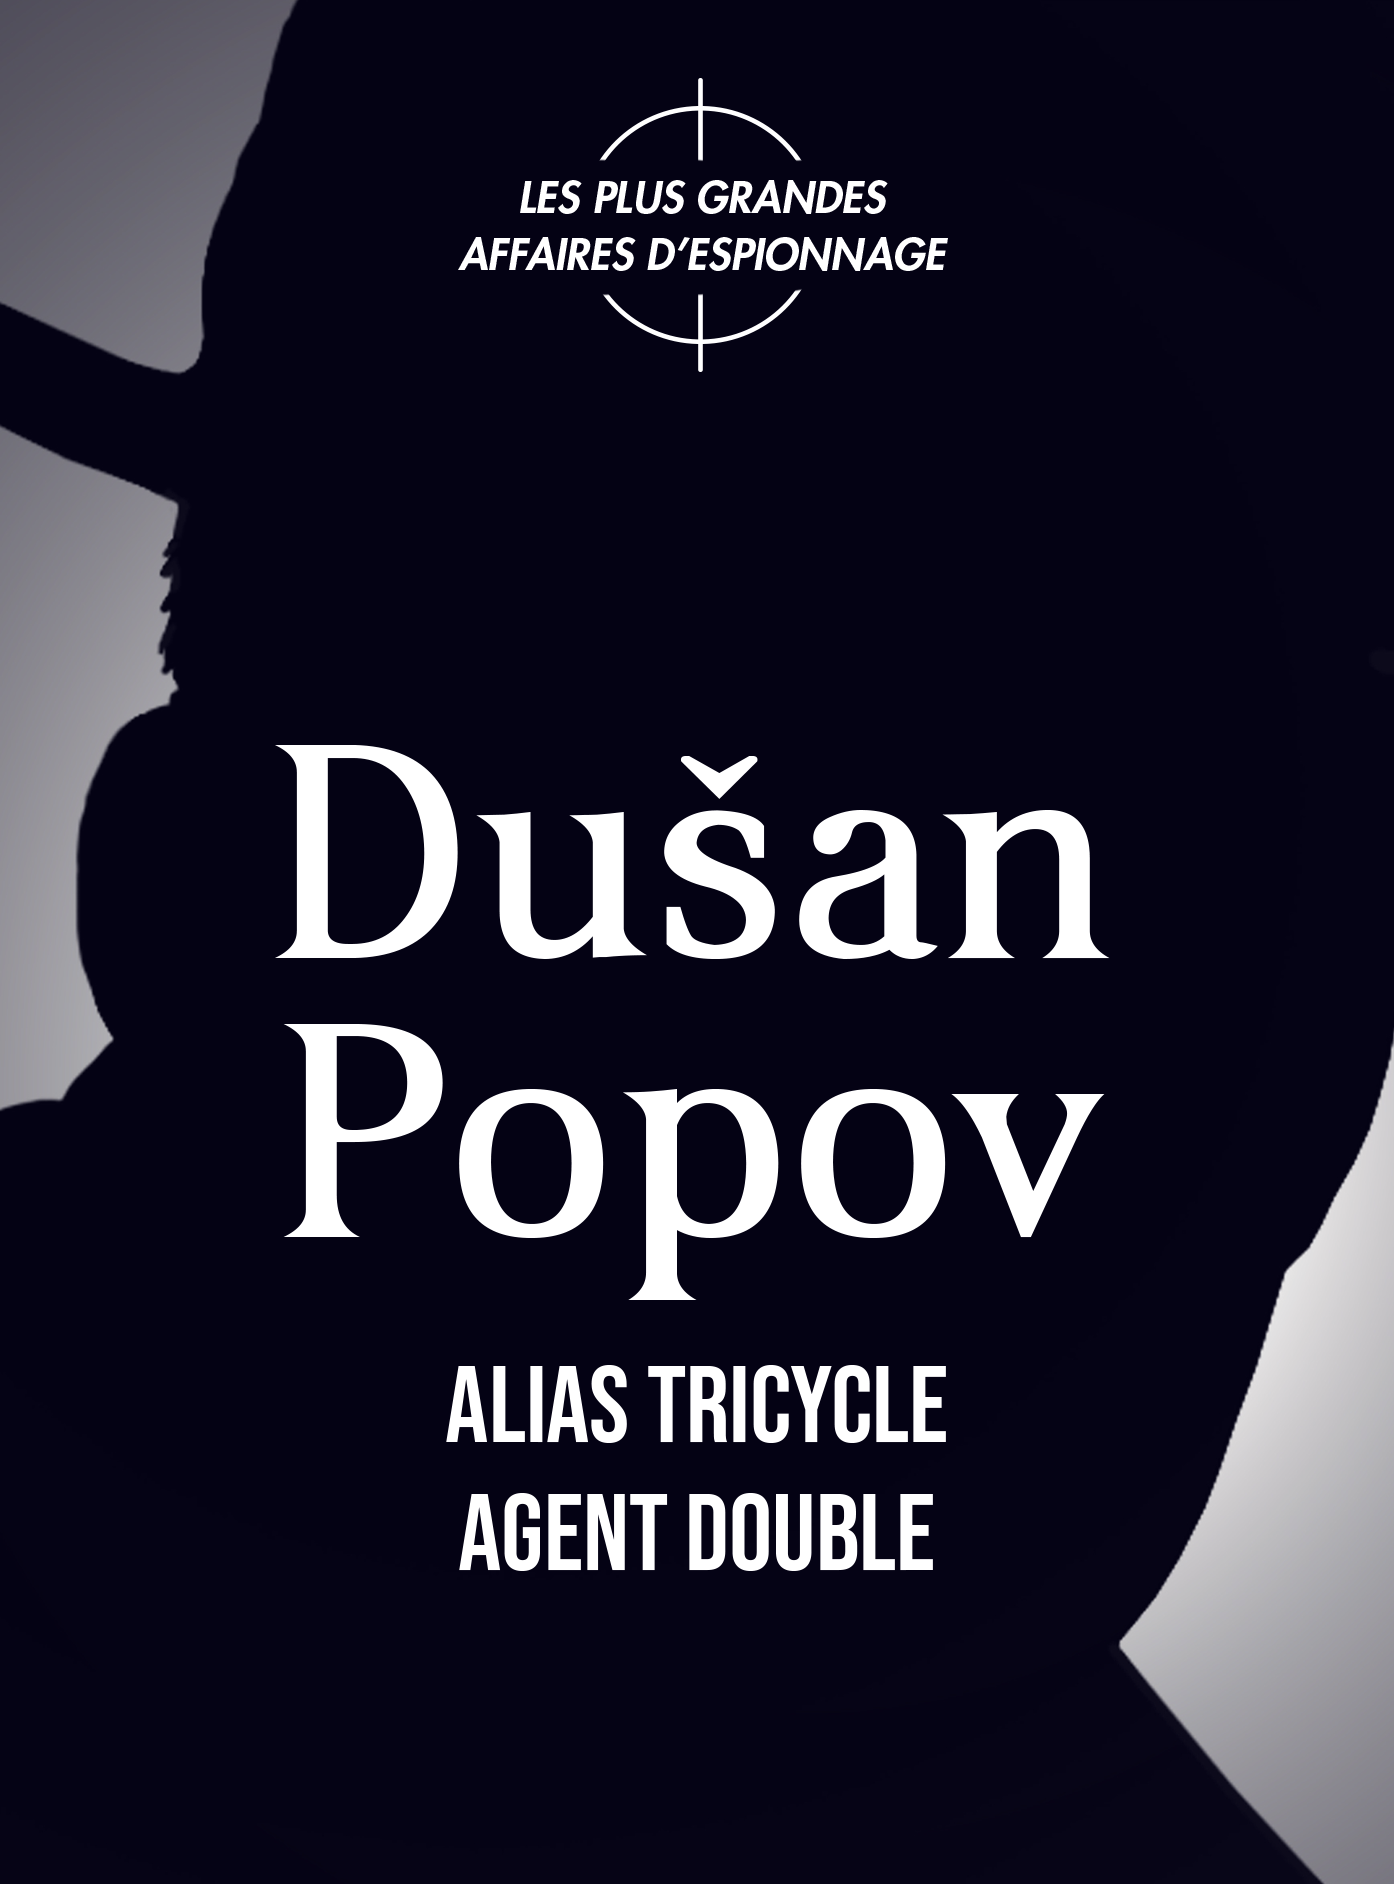 Dusan Popov, alias tricycle agent double